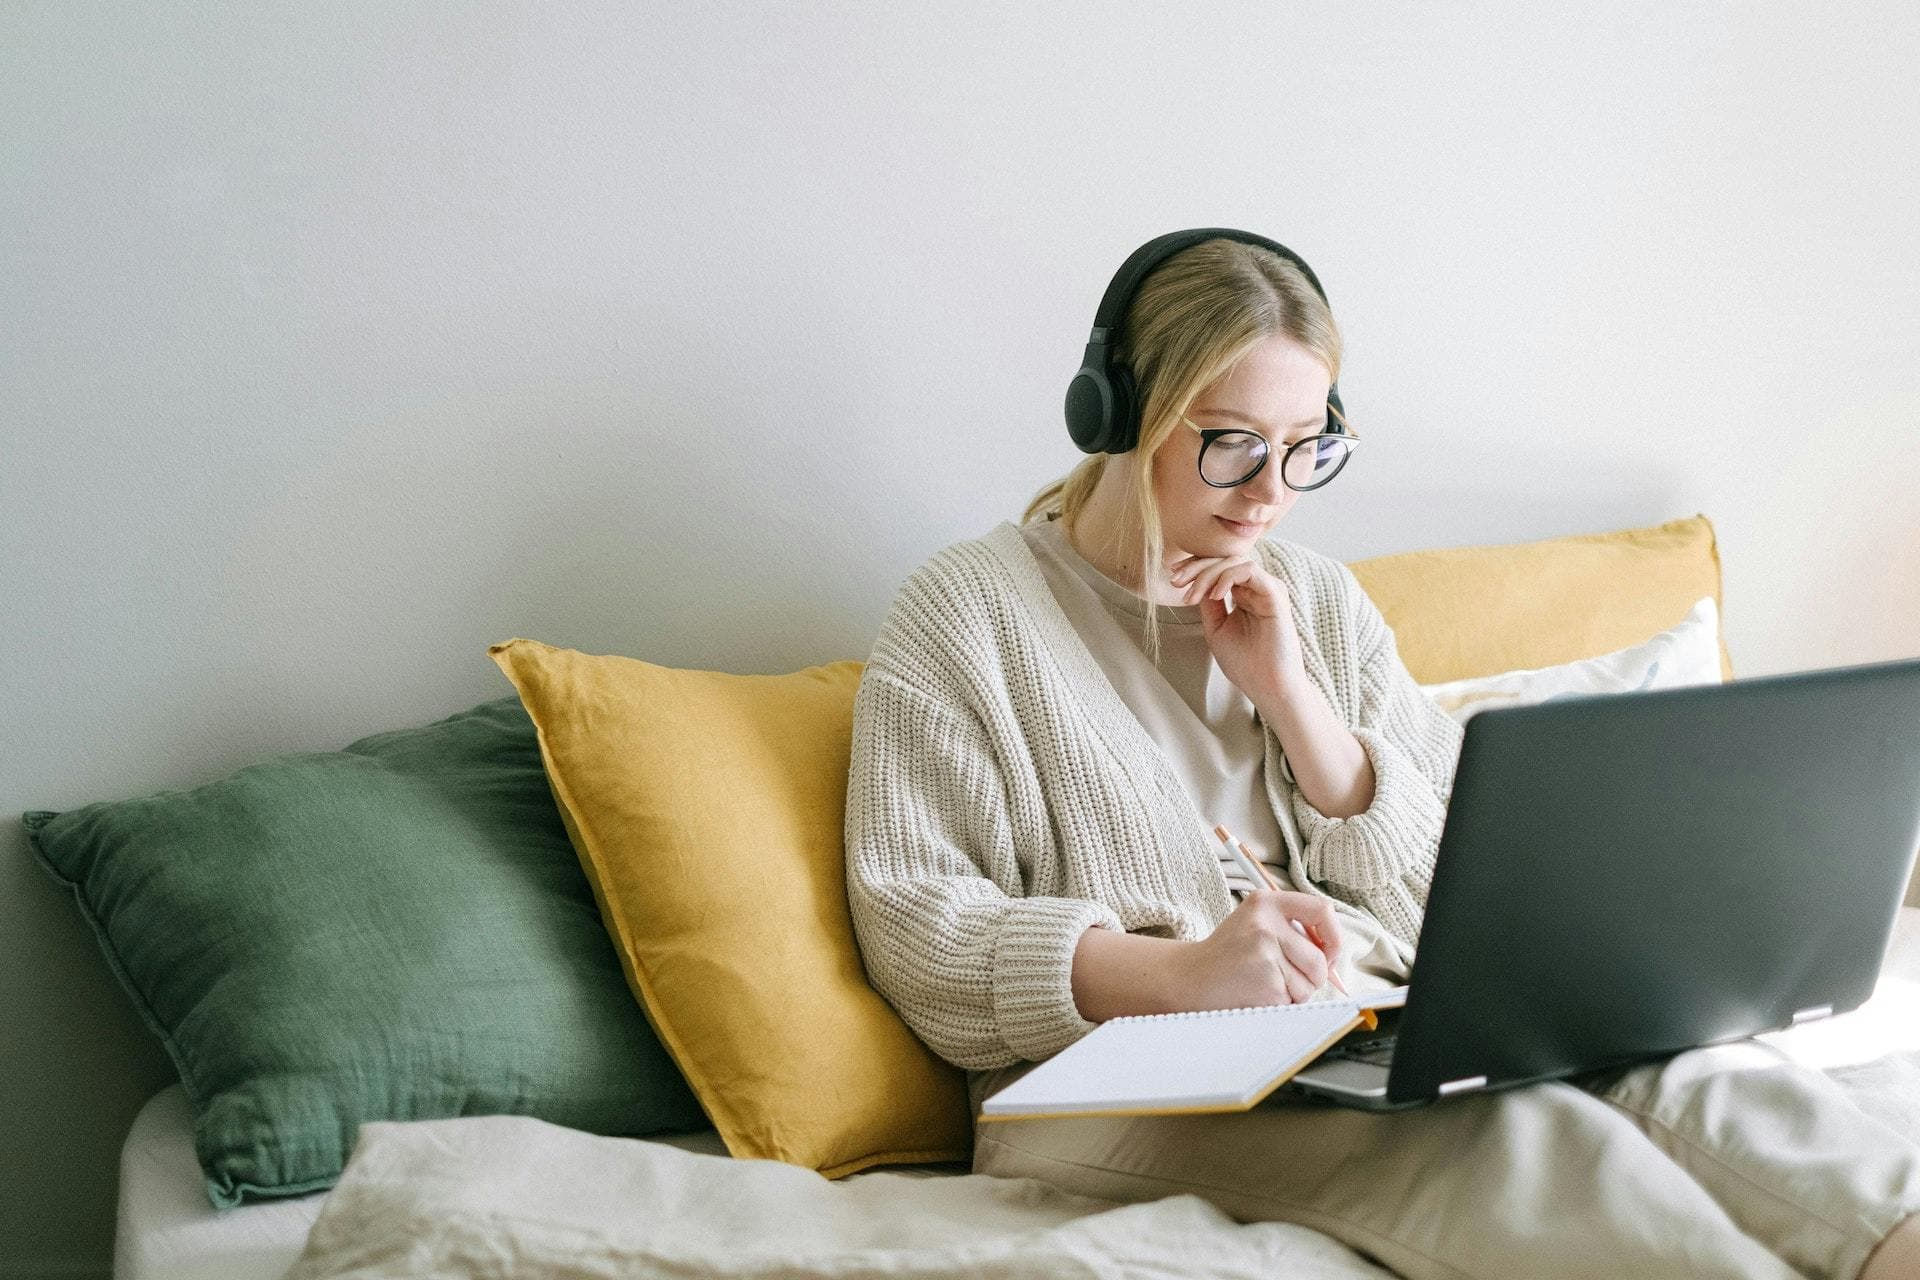 Female entrepreneur wearing headphones working on laptop from home on sofa